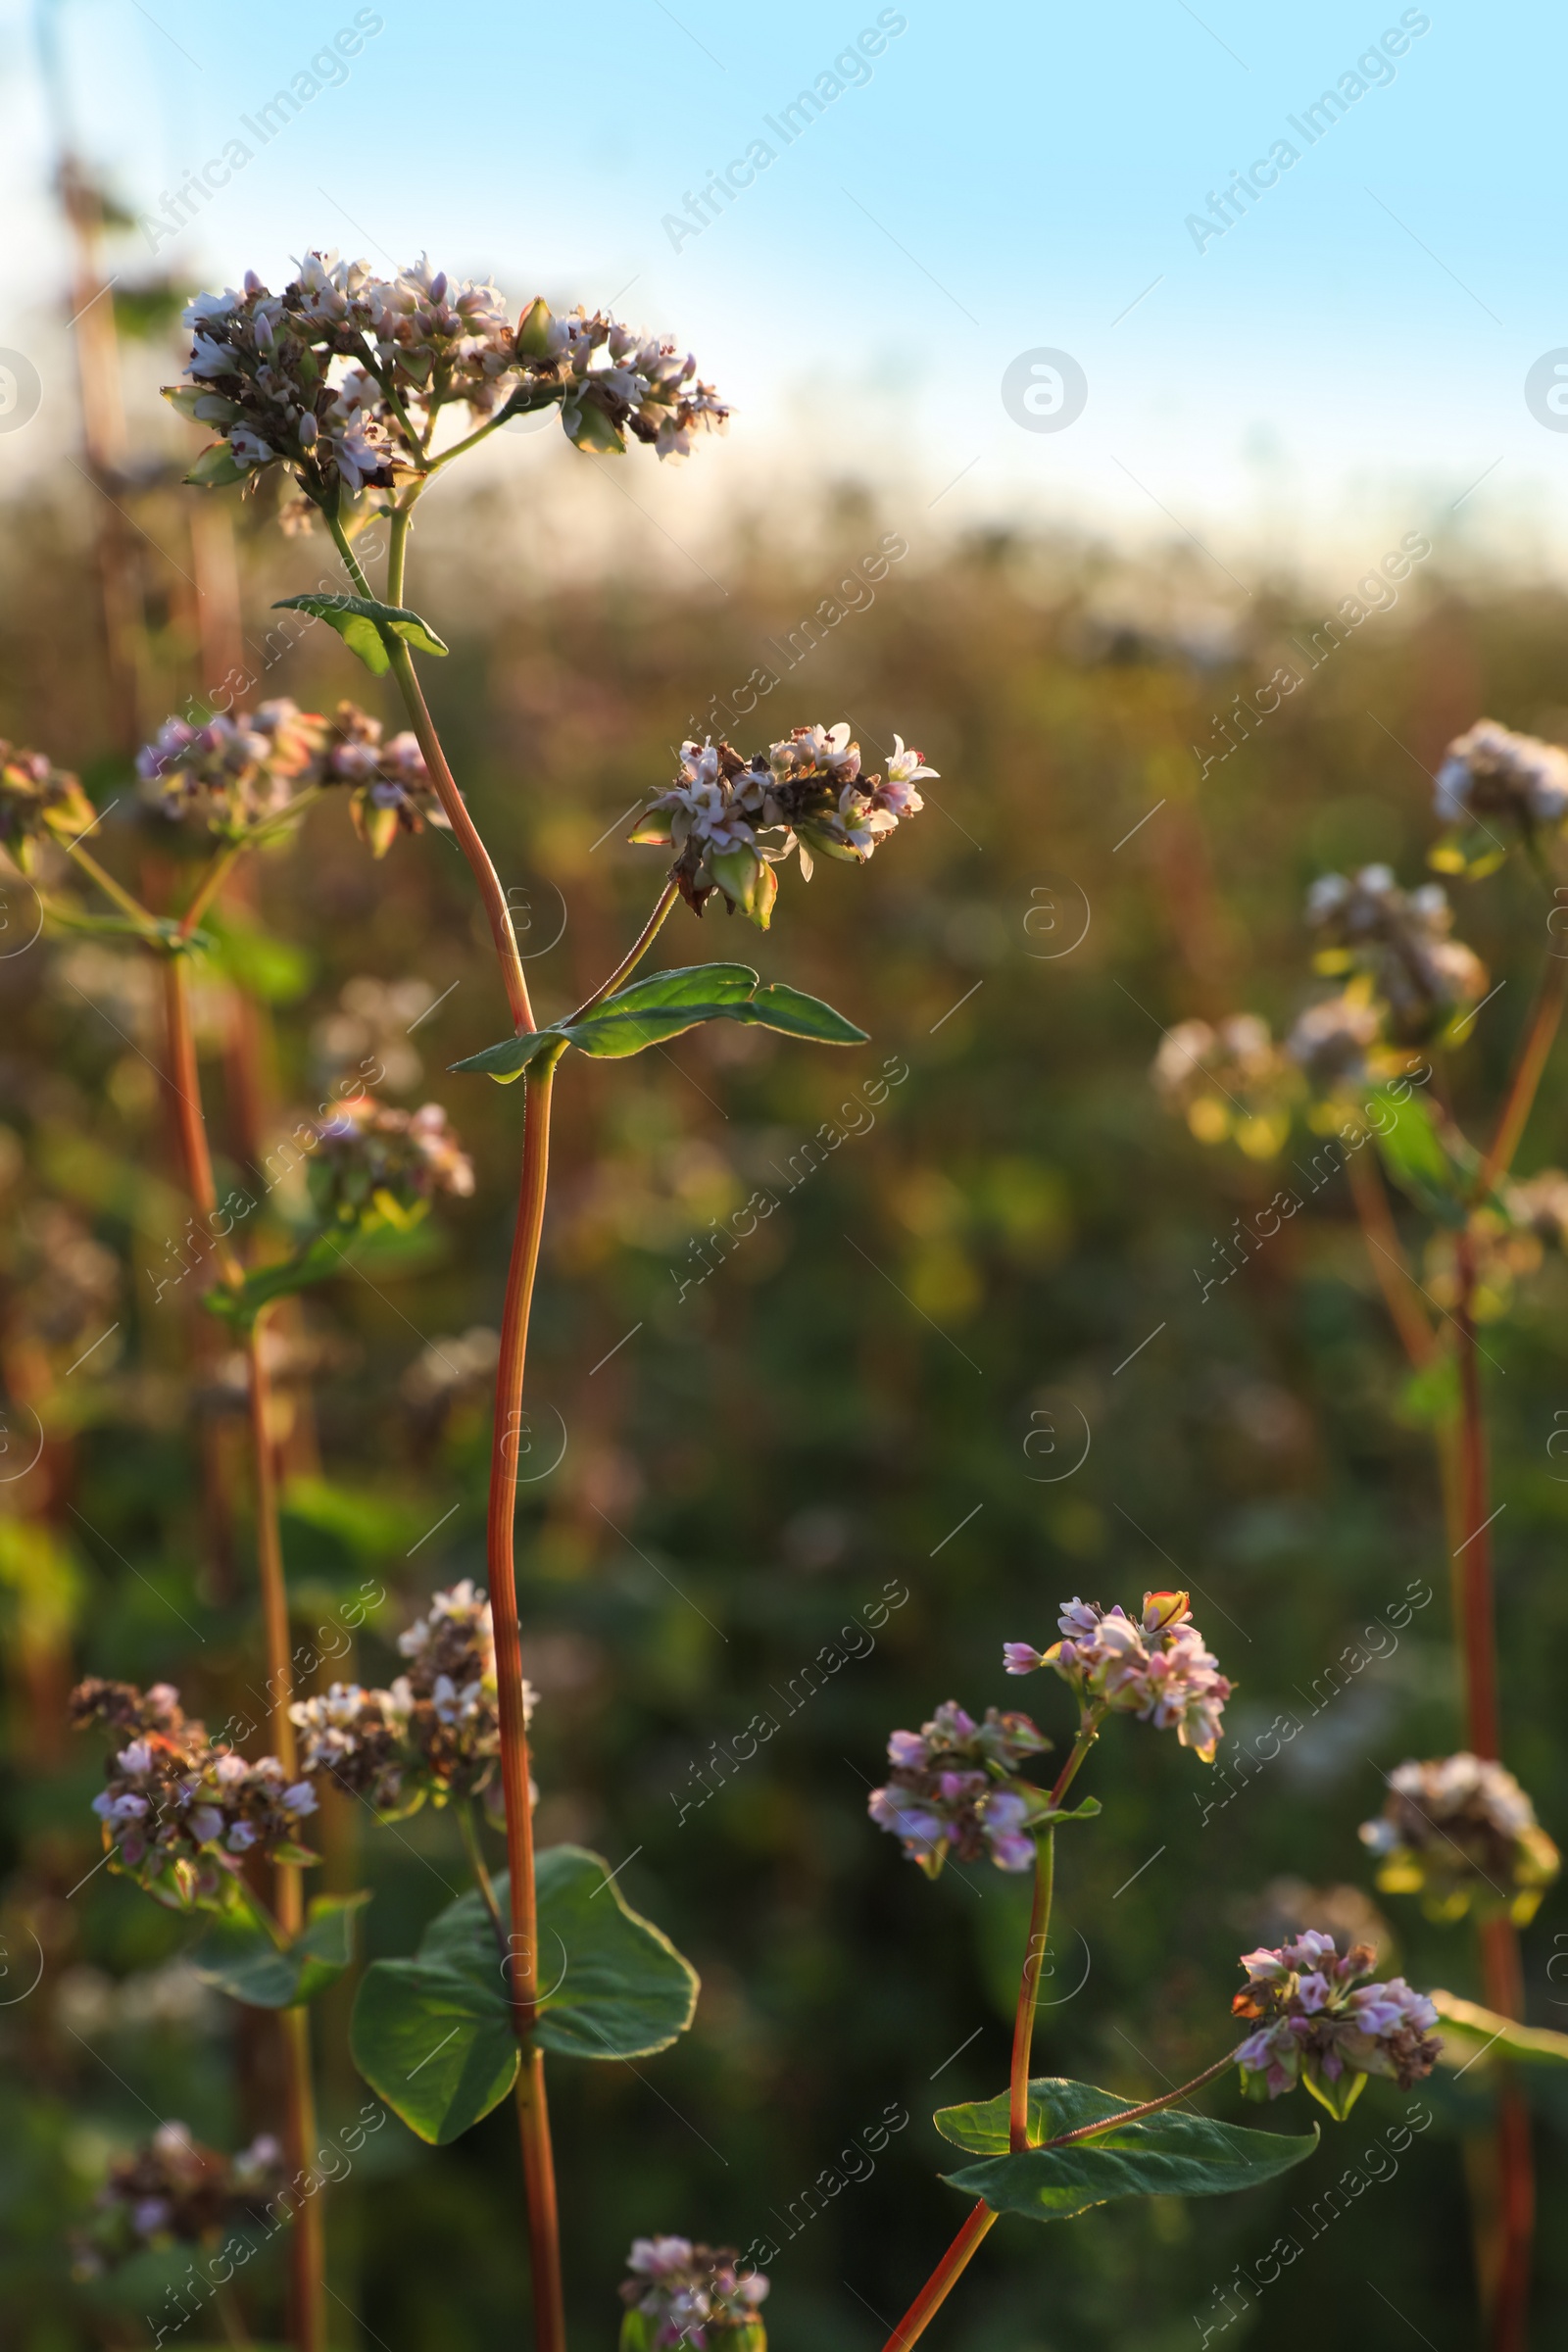 Photo of Many beautiful buckwheat flowers growing in field on sunny day, closeup